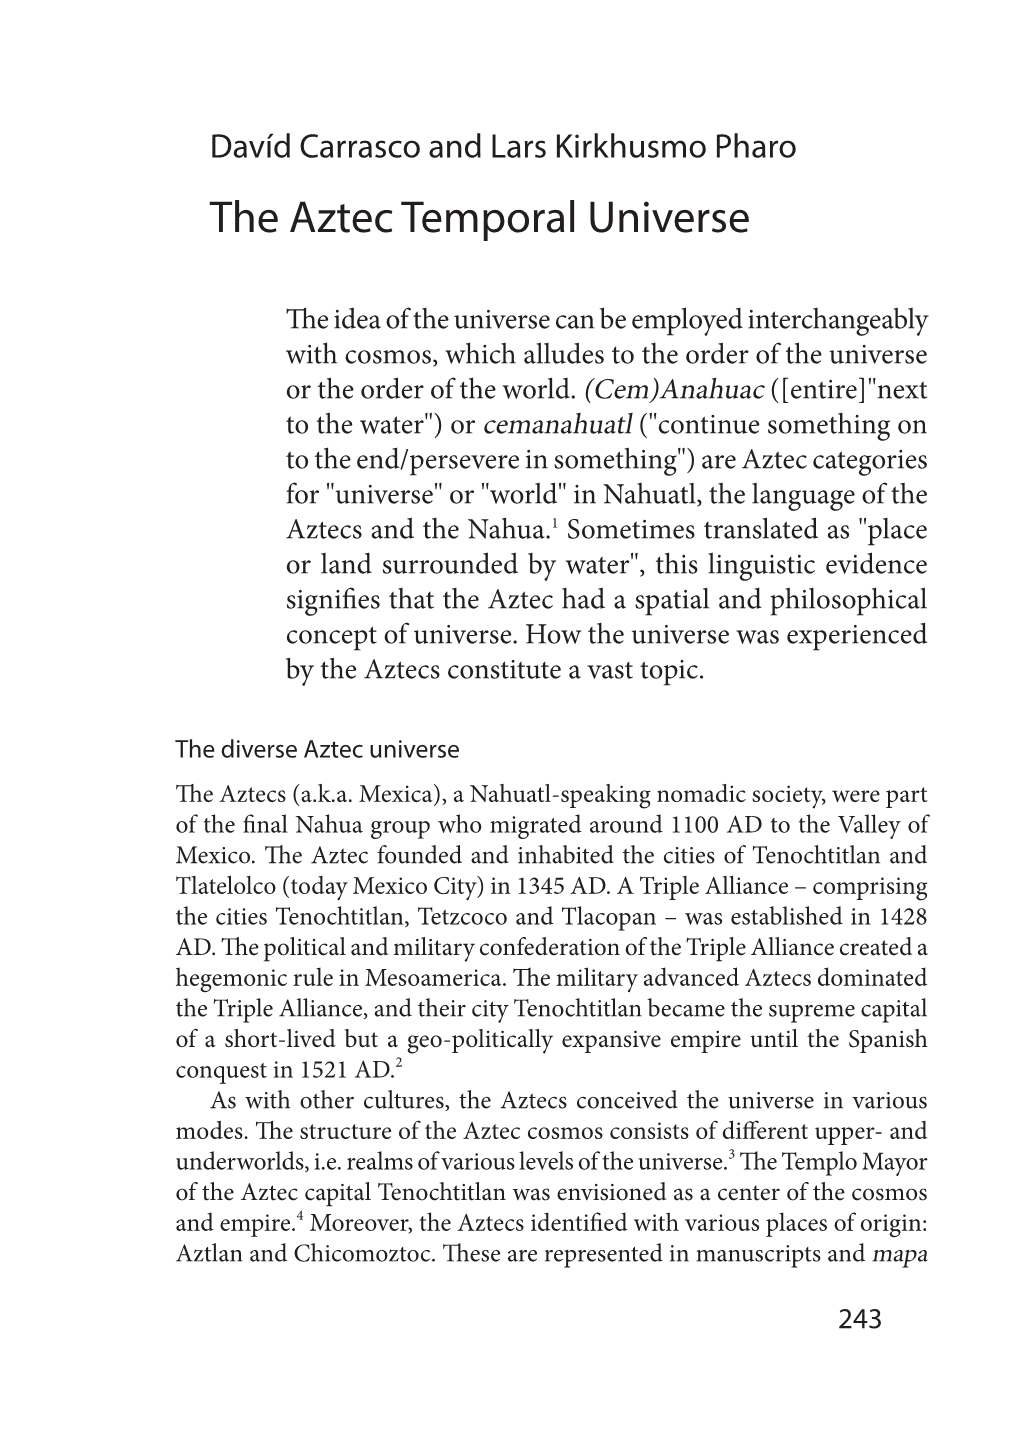 The Aztec Temporal Universe